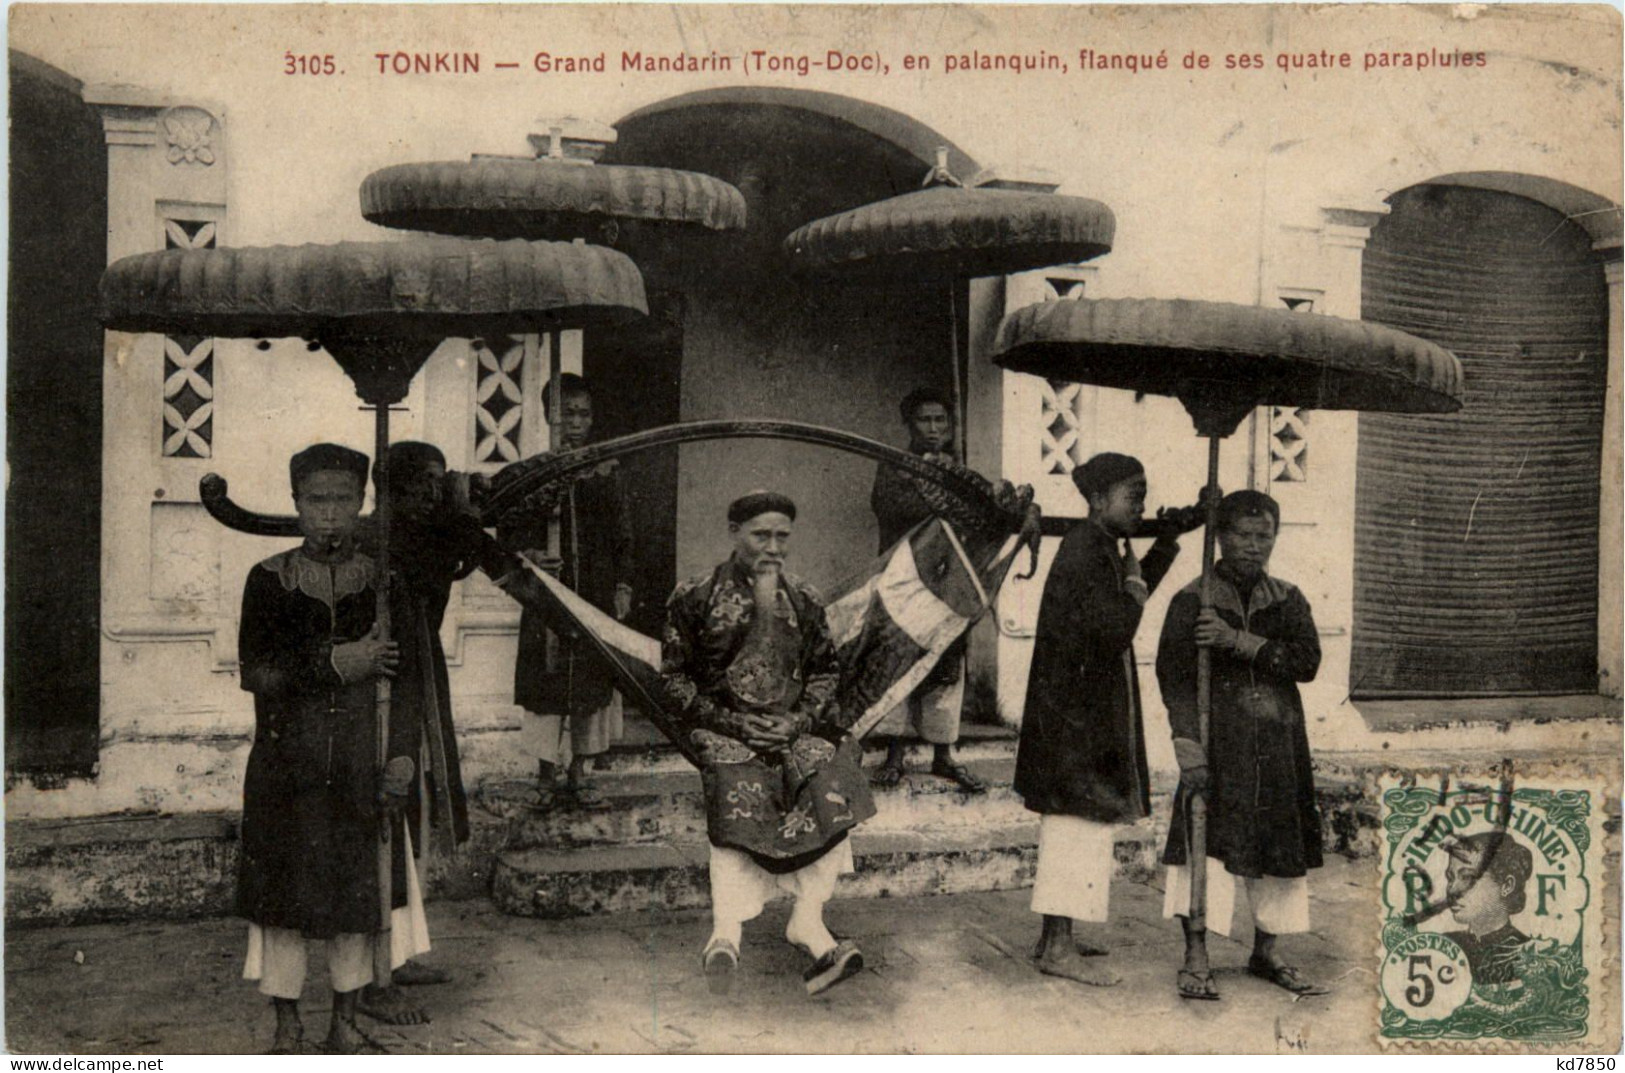 Tonkin - Grand Mandarin Tong-Doo - Vietnam